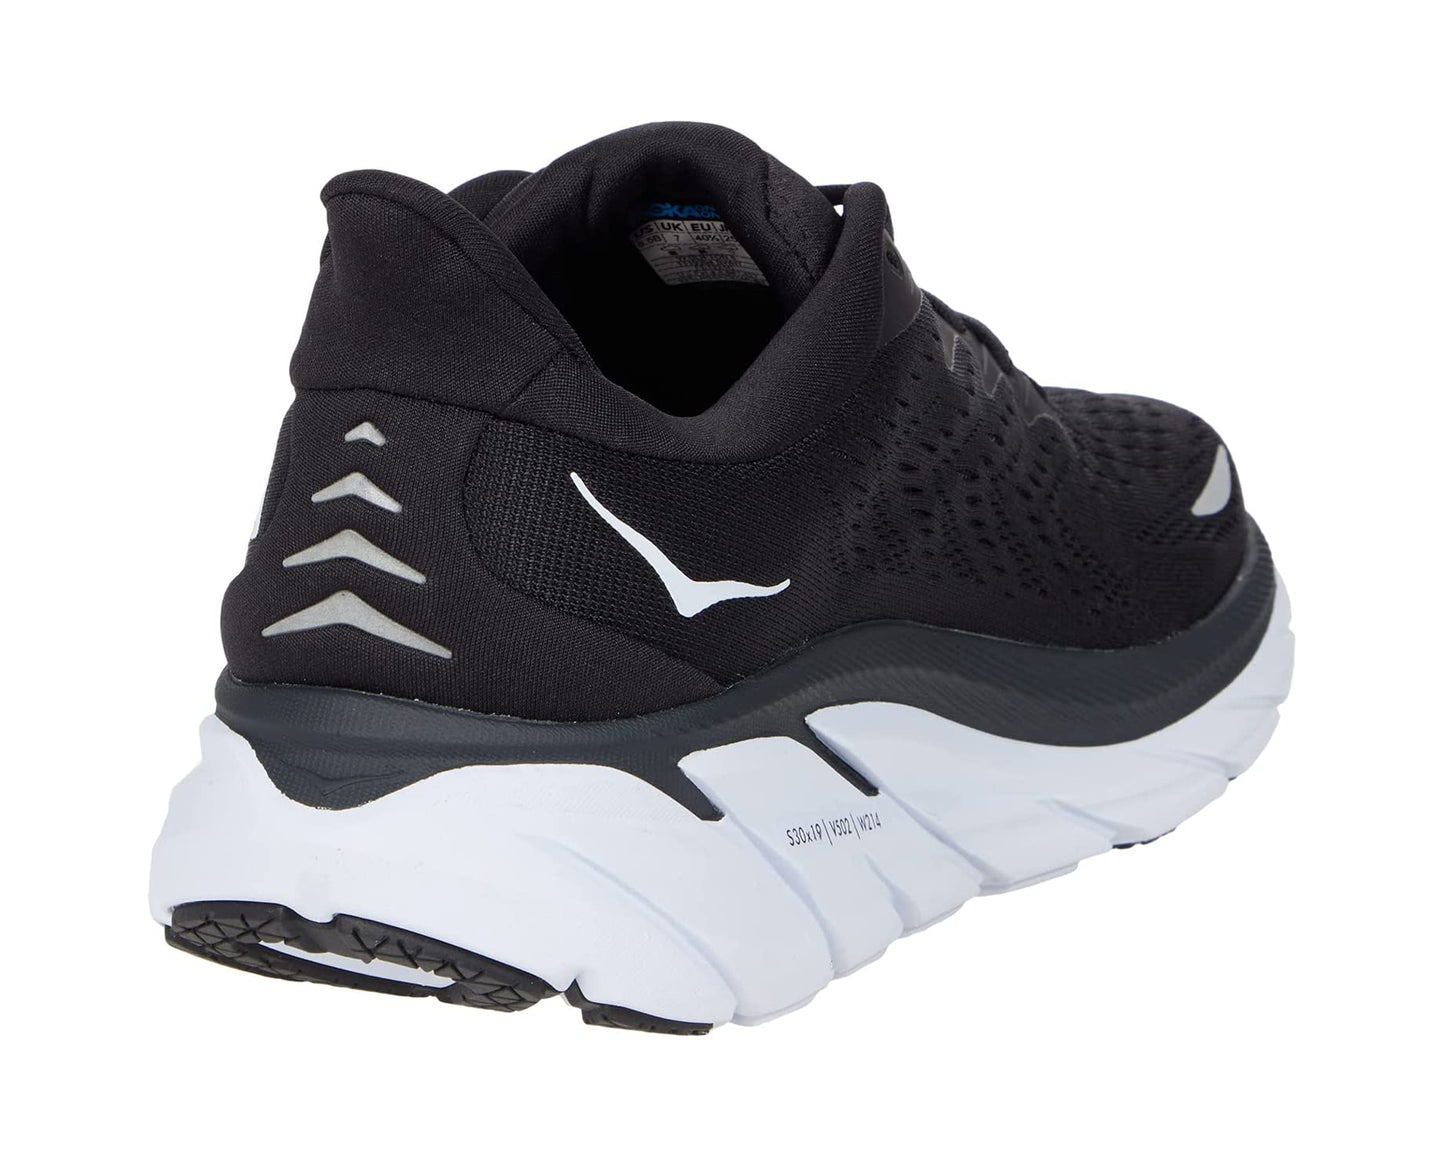 Hoka Clifton 8-Women Running Shoes- Black/White - Size 8 M US - A Horizon Dawn